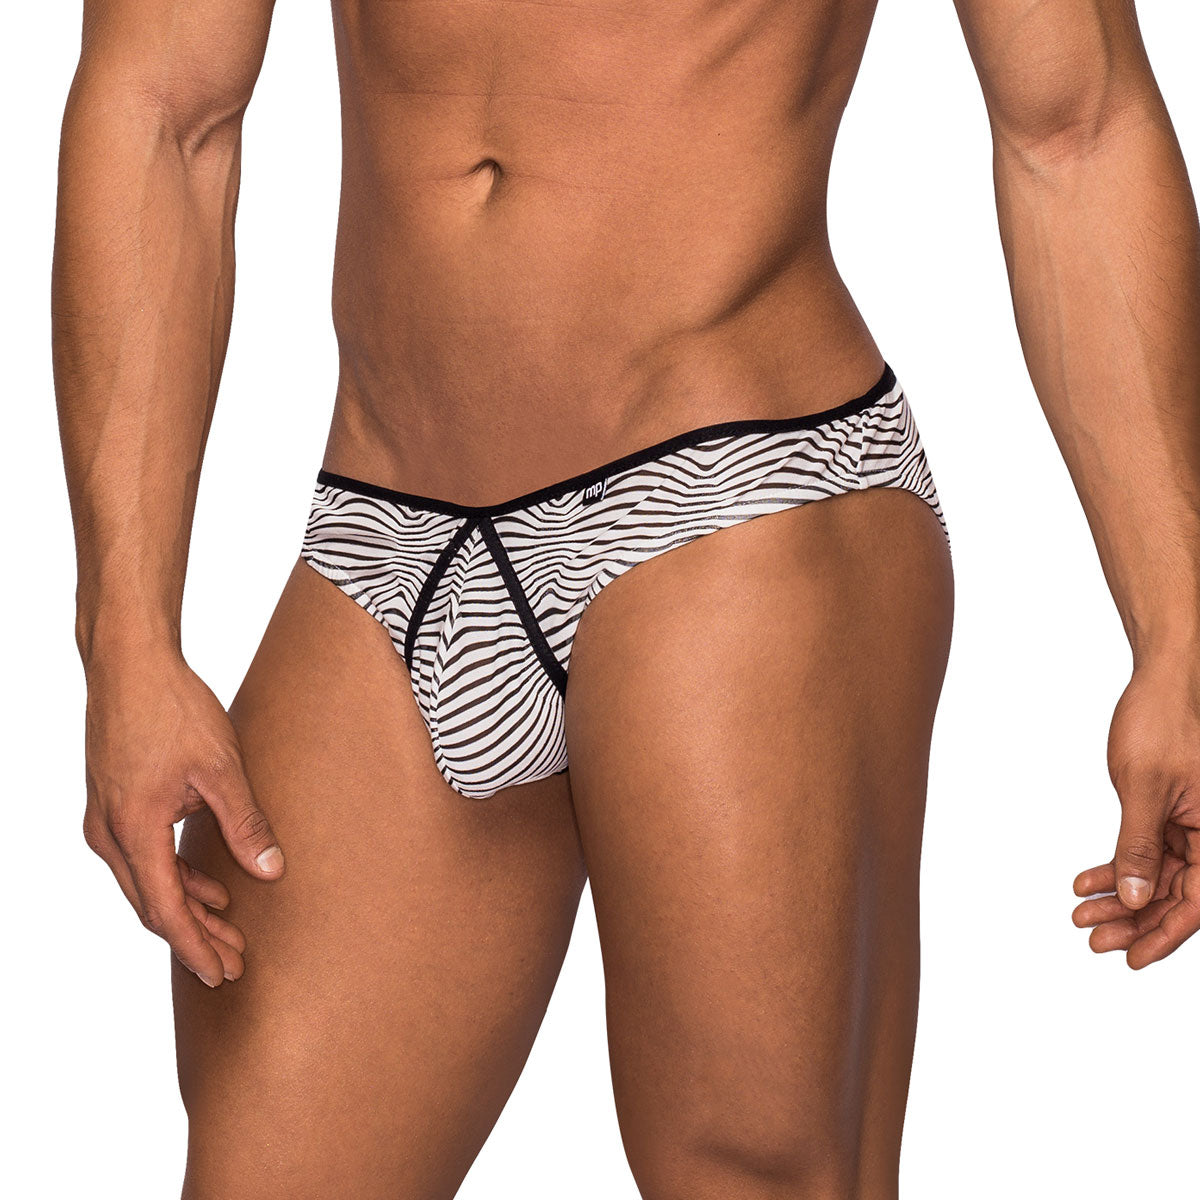 SALE - Male Power Zebra Inspired Bikini Brief Black and White